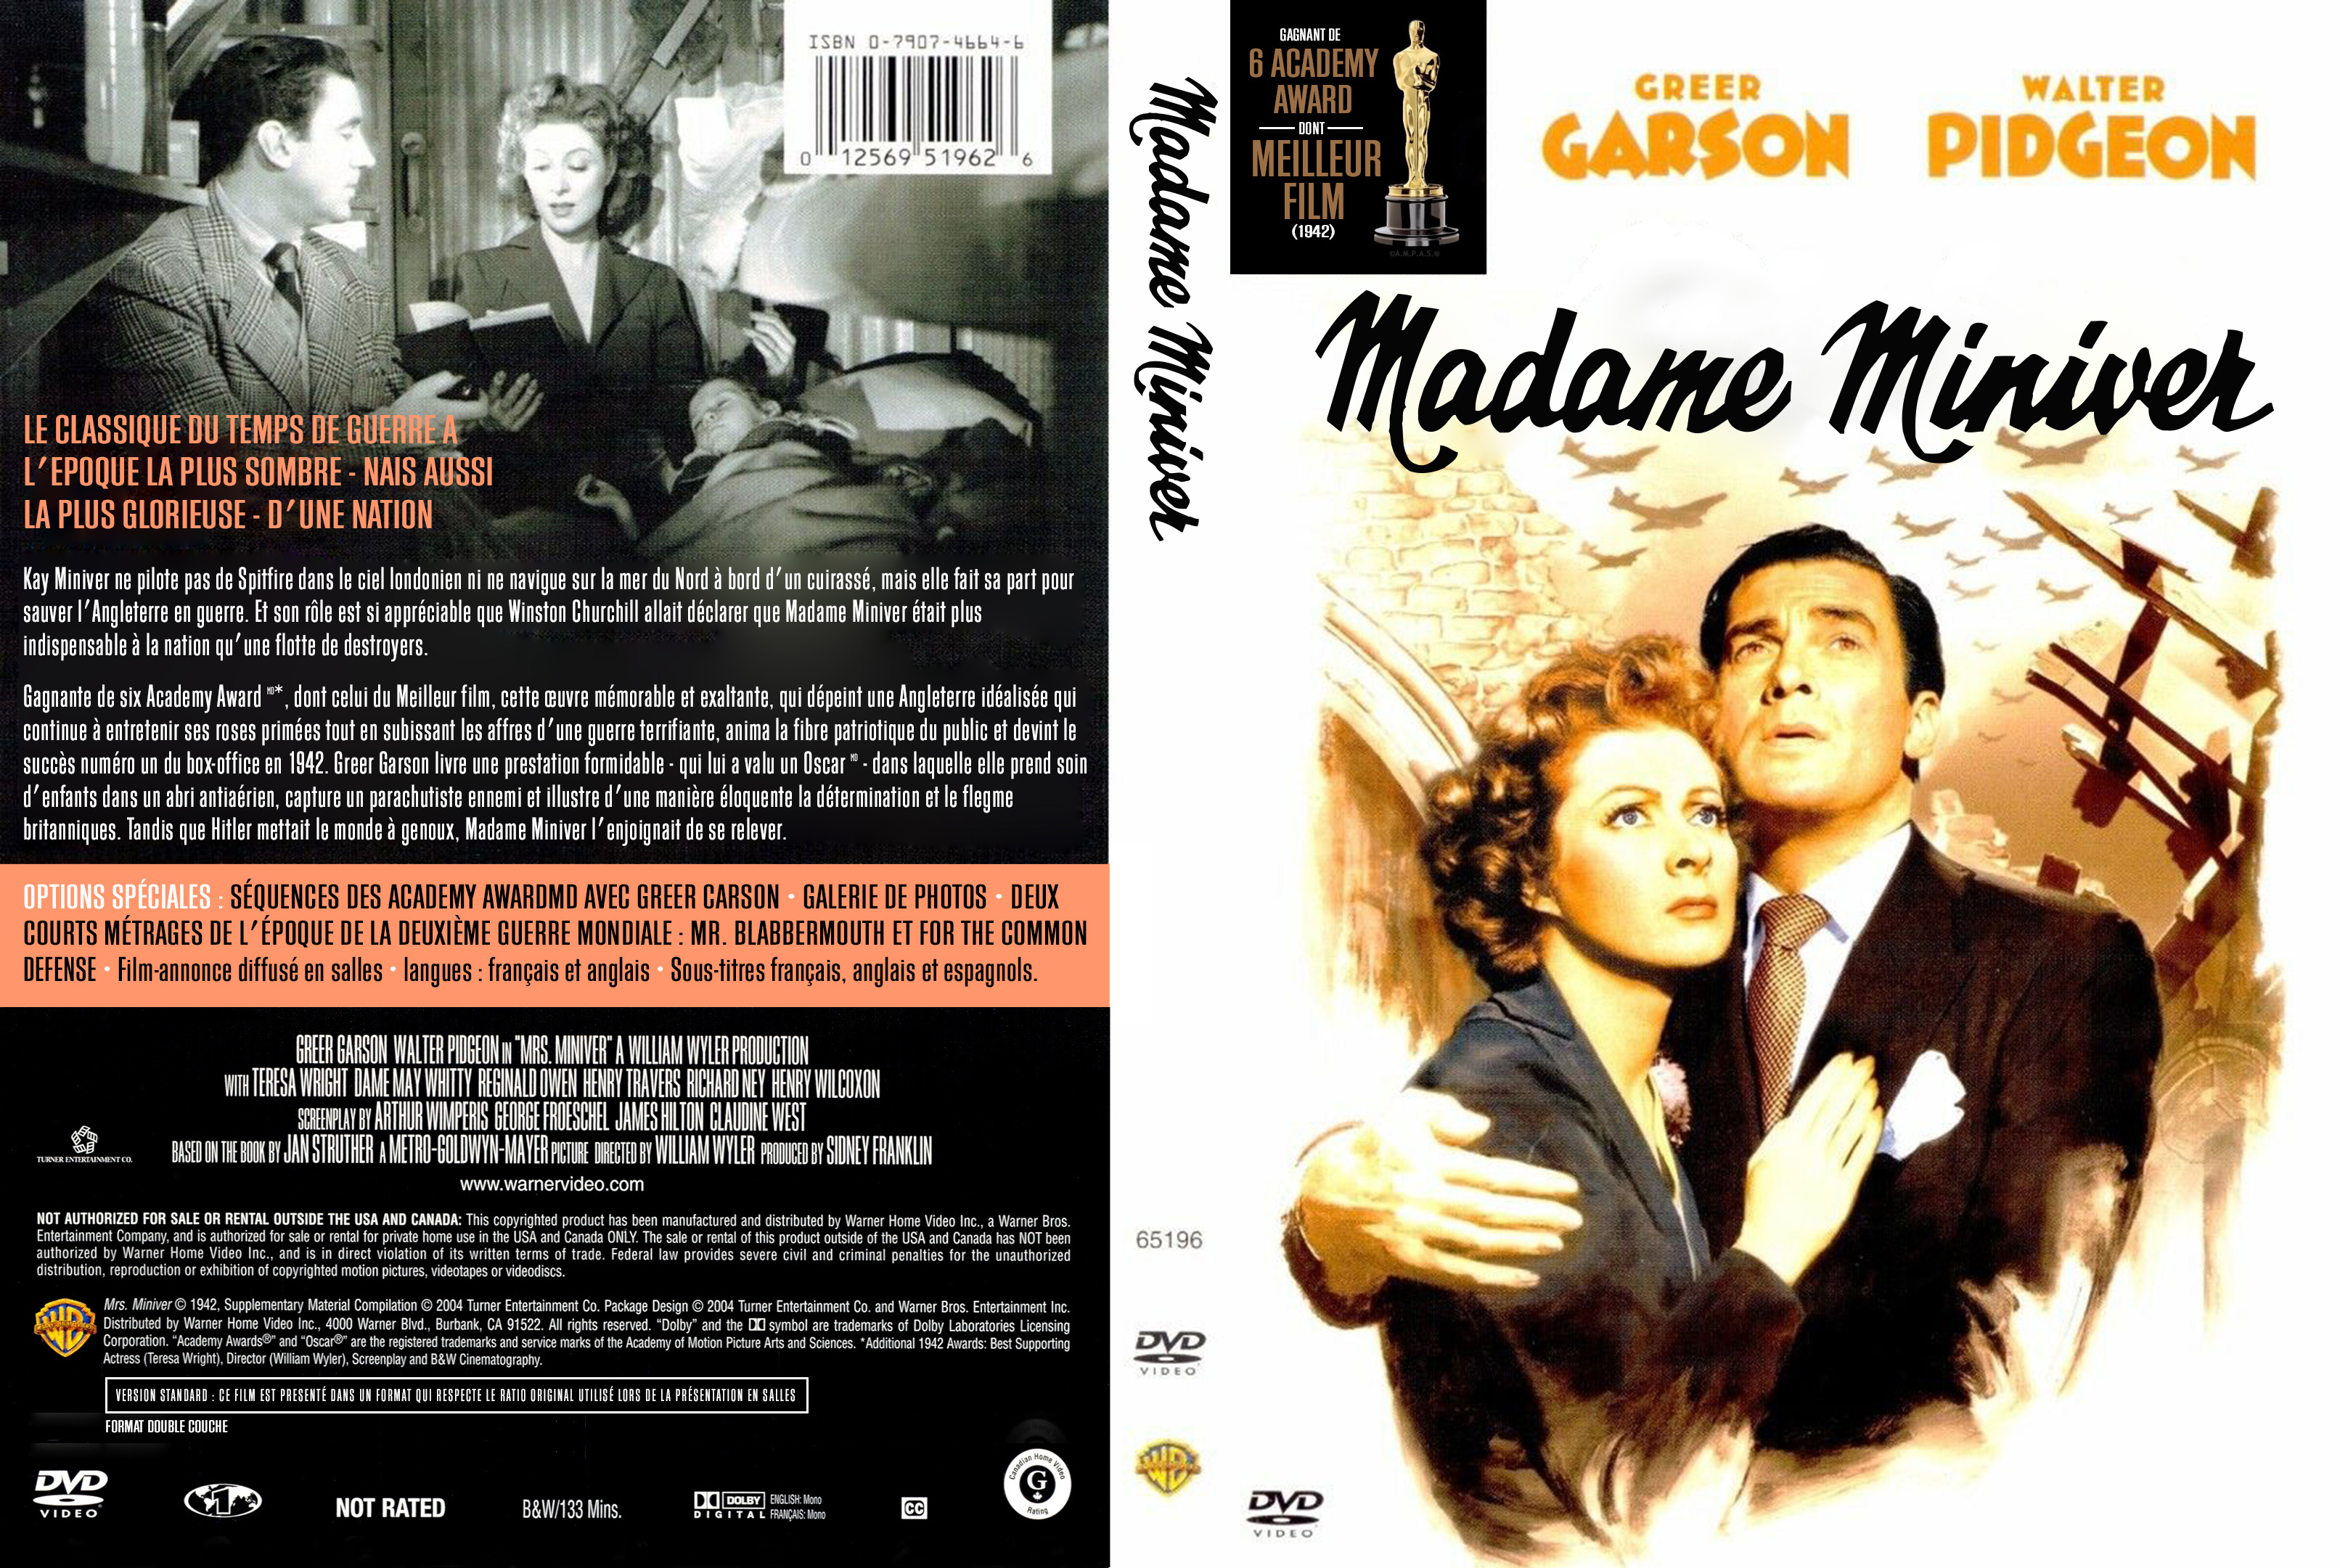 Jaquette DVD Madame Miniver custom